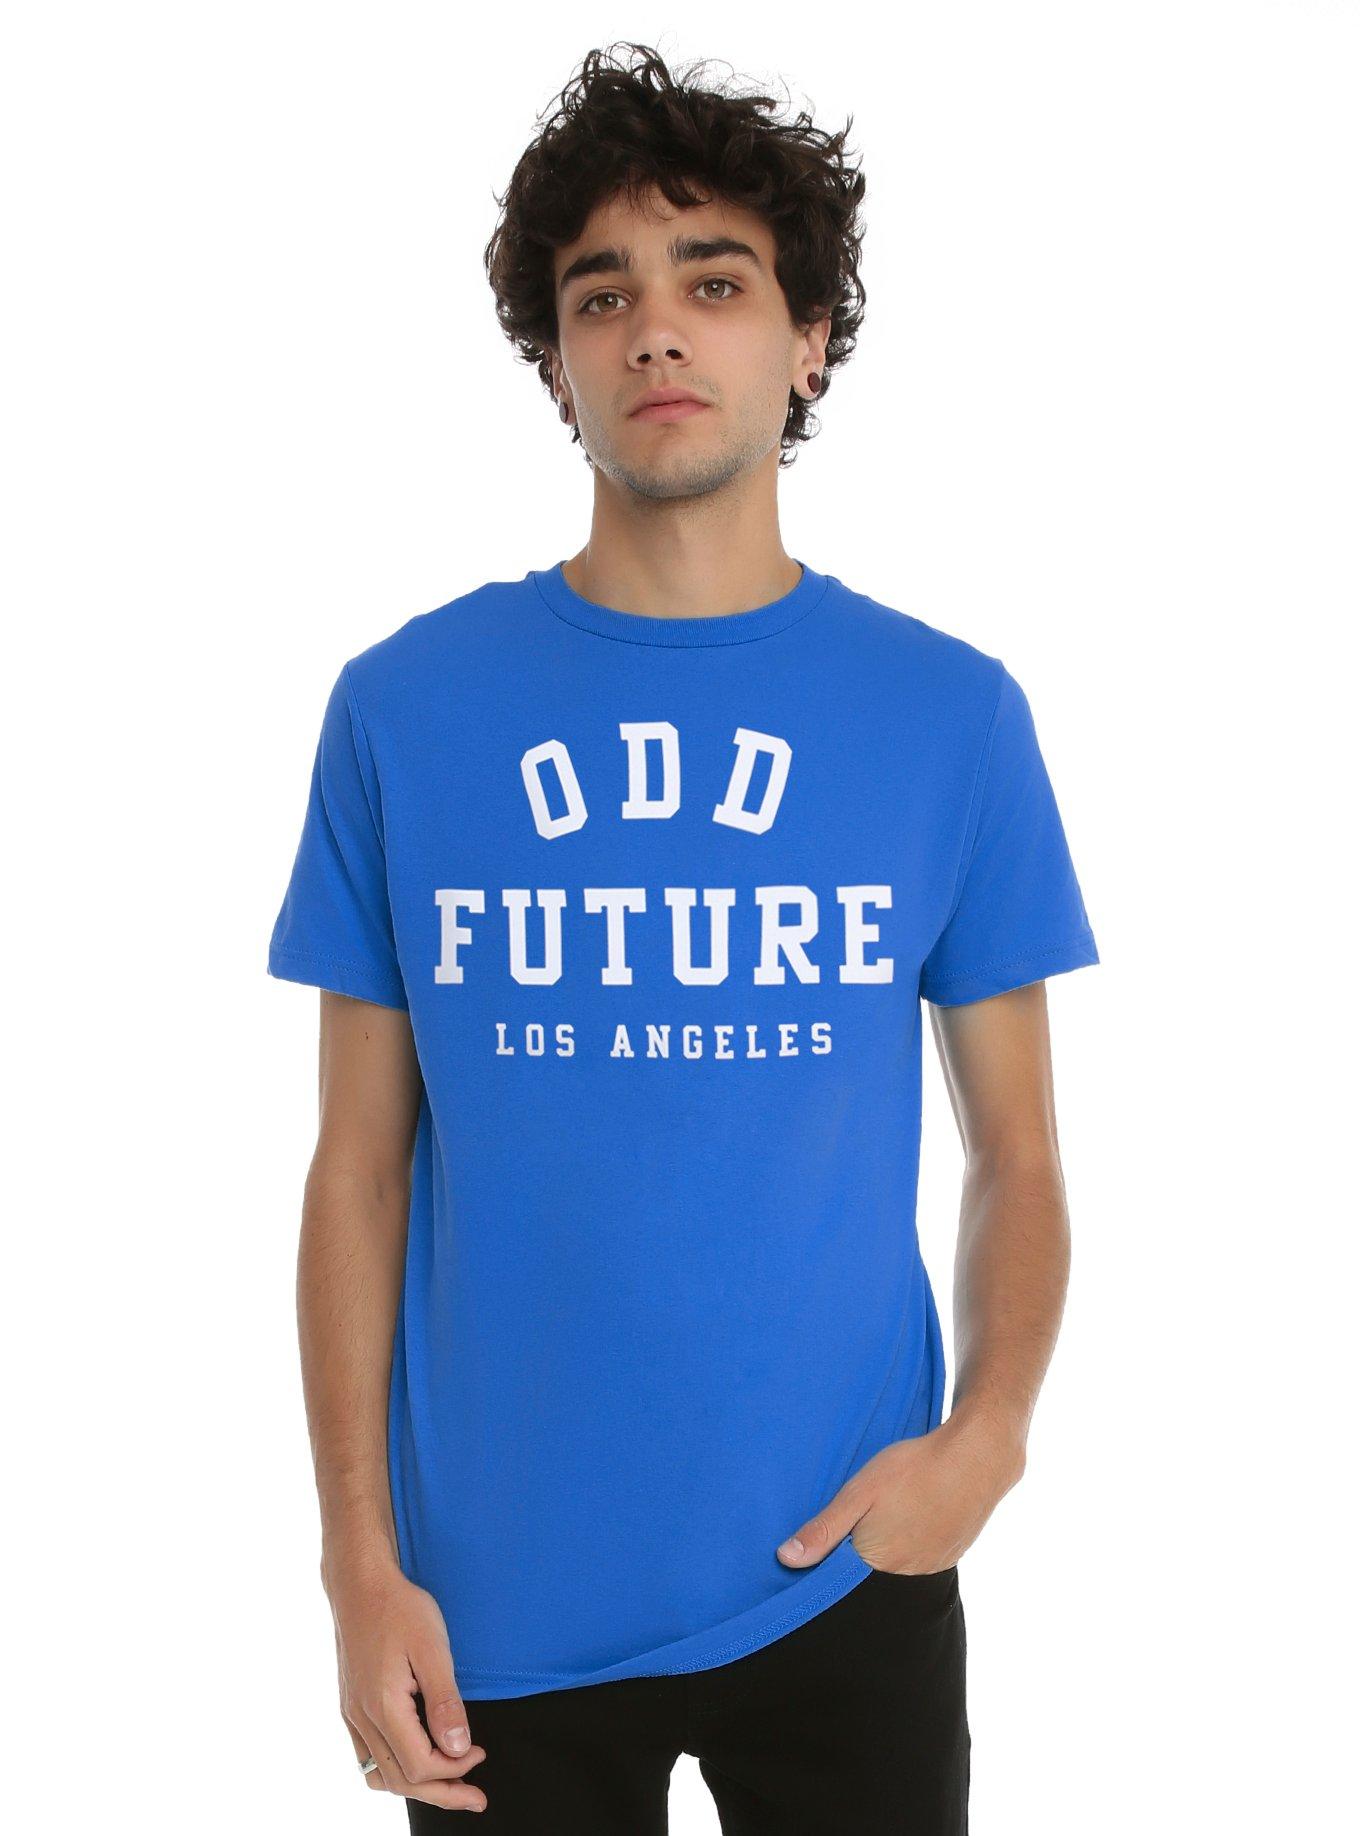 odd future shirt hot topic